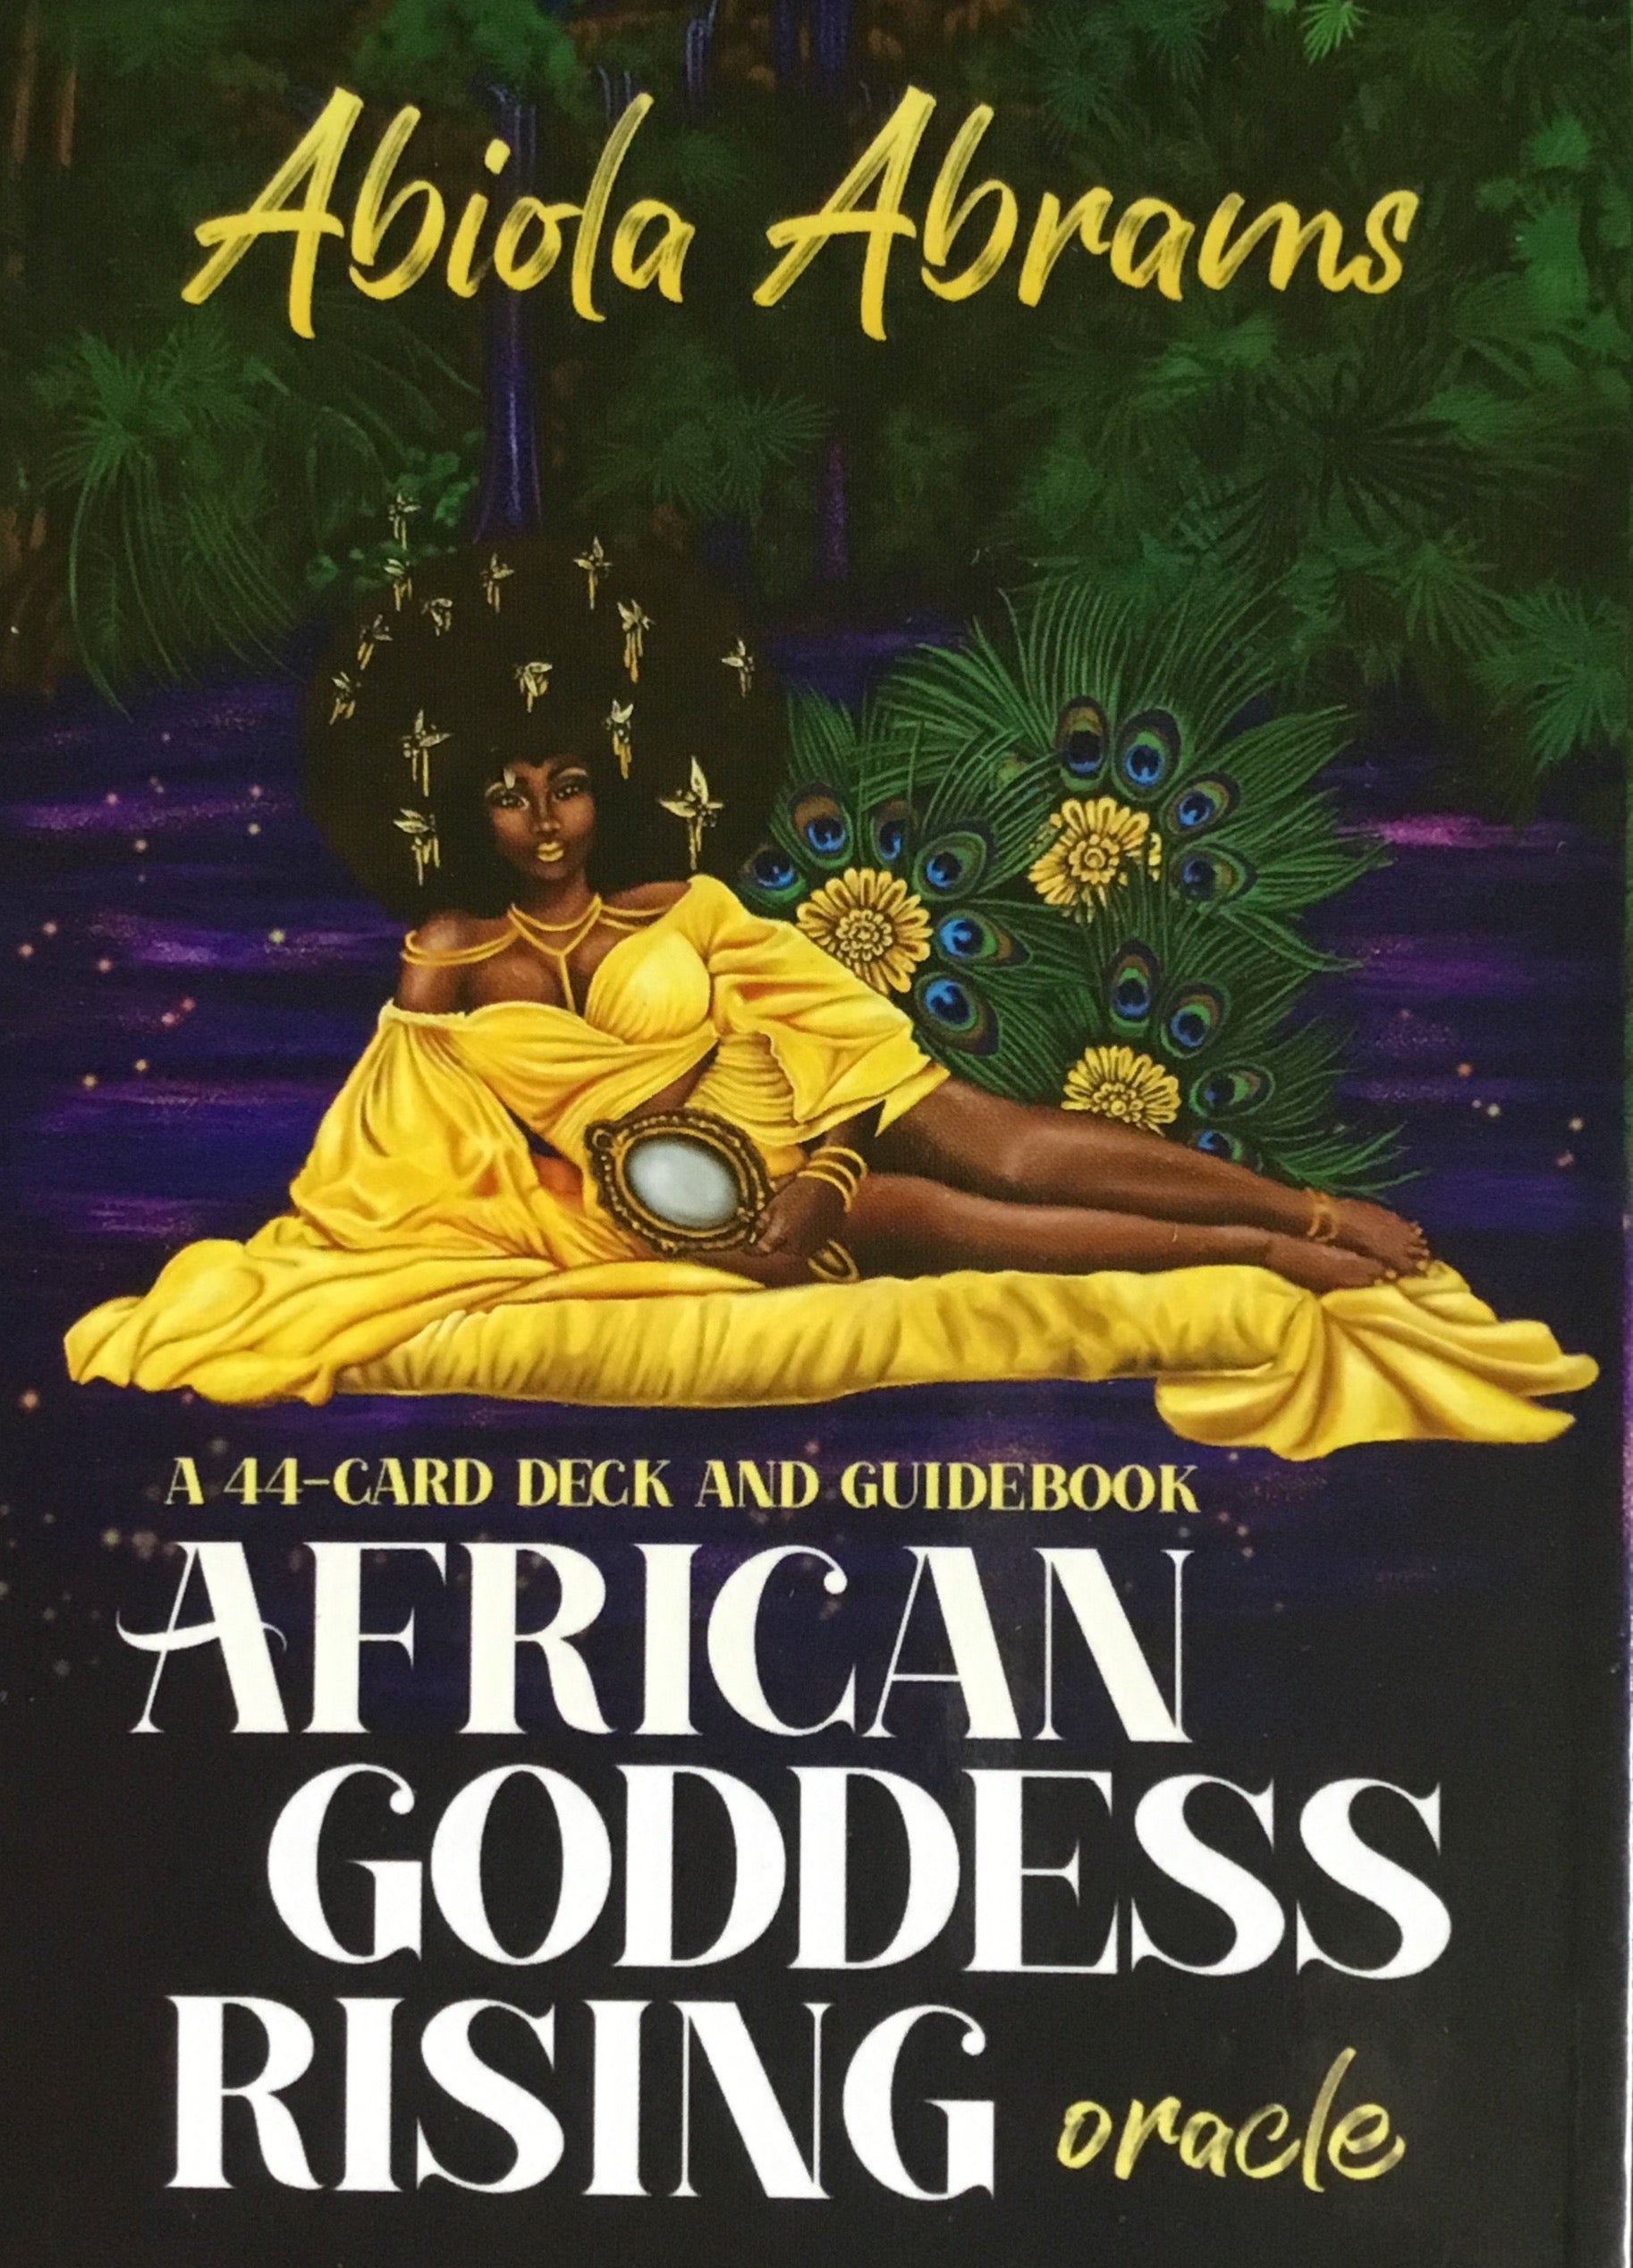 African Goddess Rising Oracle, Oracle Decks, Melanated Decks, African Spirituality, Goddess Energy, Tarot Decks